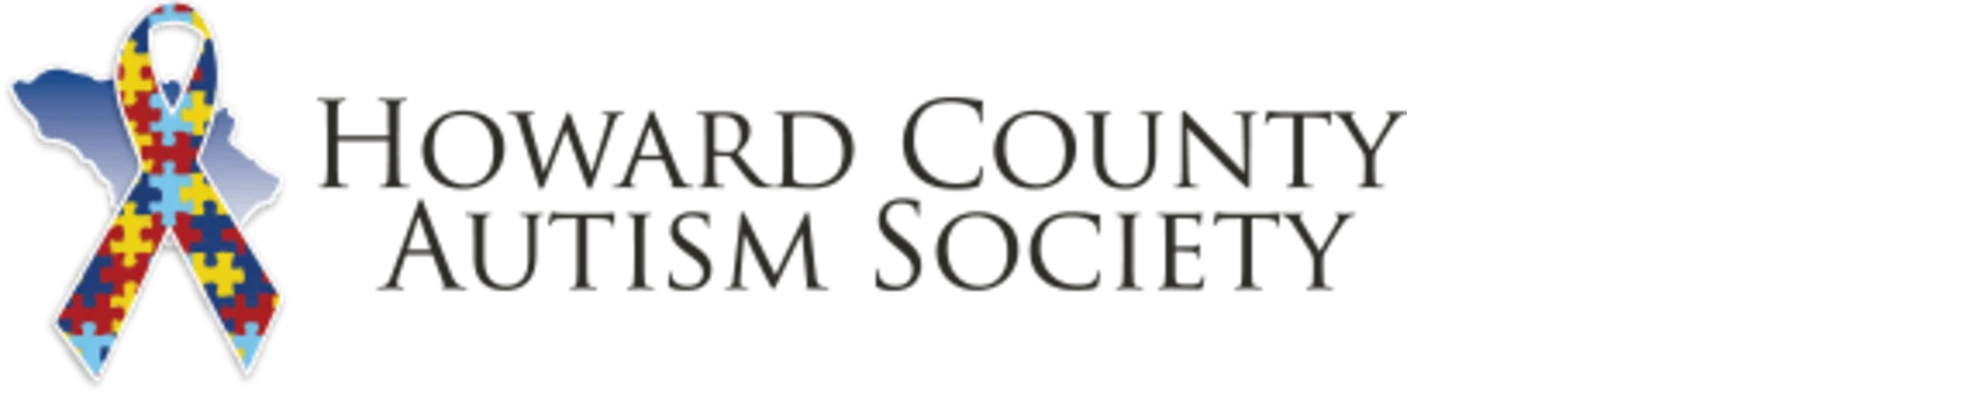 Howard County Austism Society logo